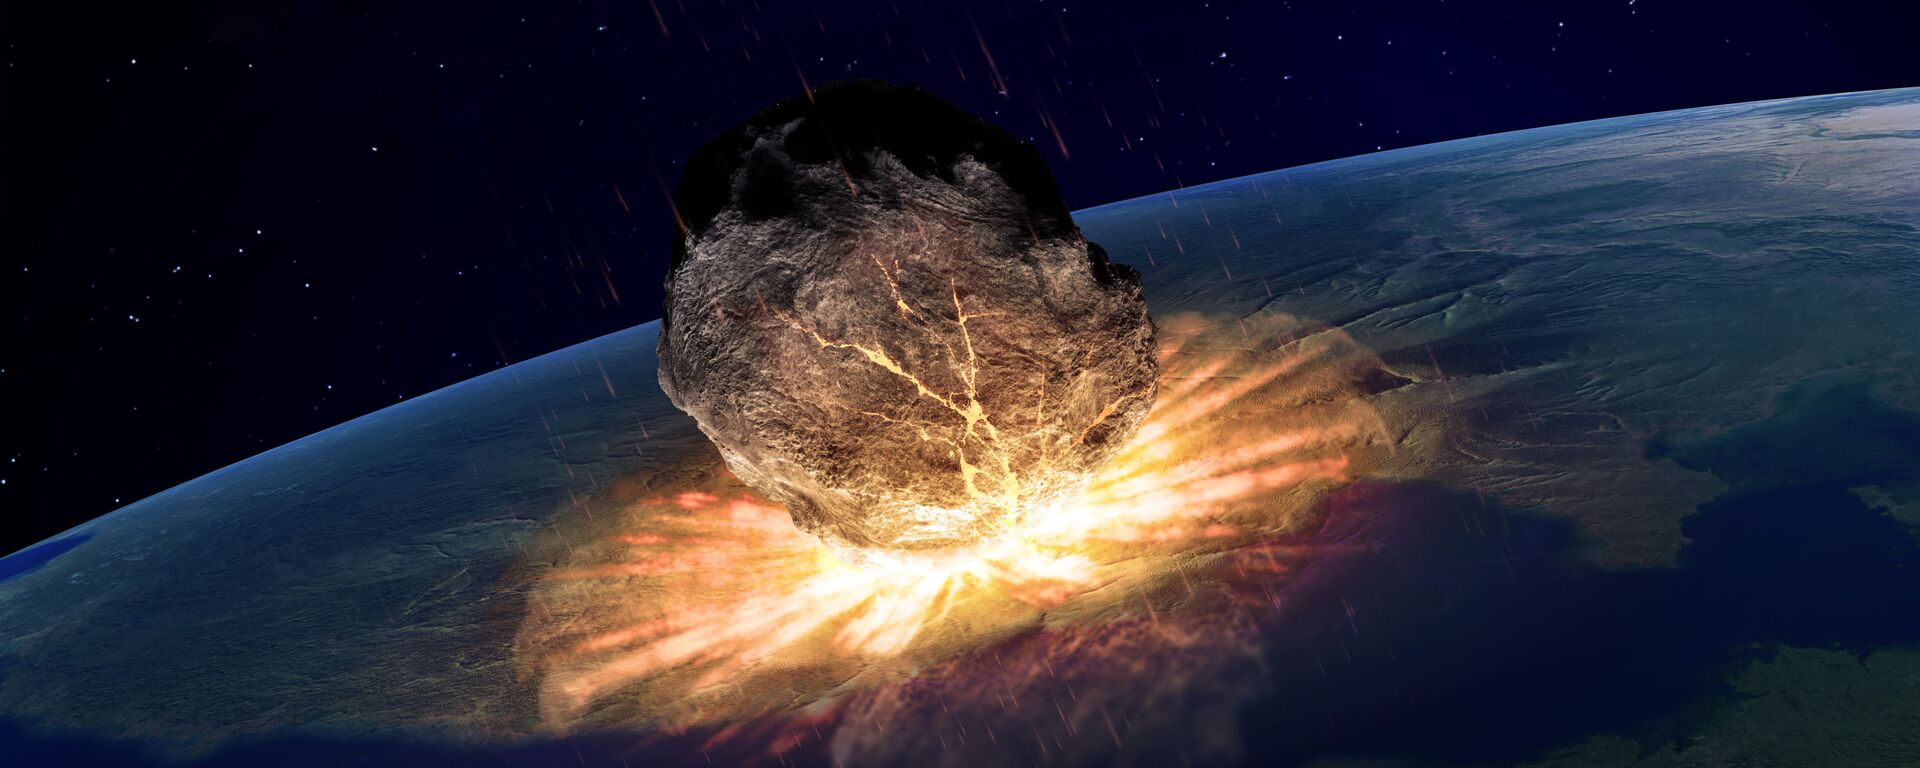 Иллюстрация падения астероида на Землю  - Sputnik Việt Nam, 1920, 03.01.2022